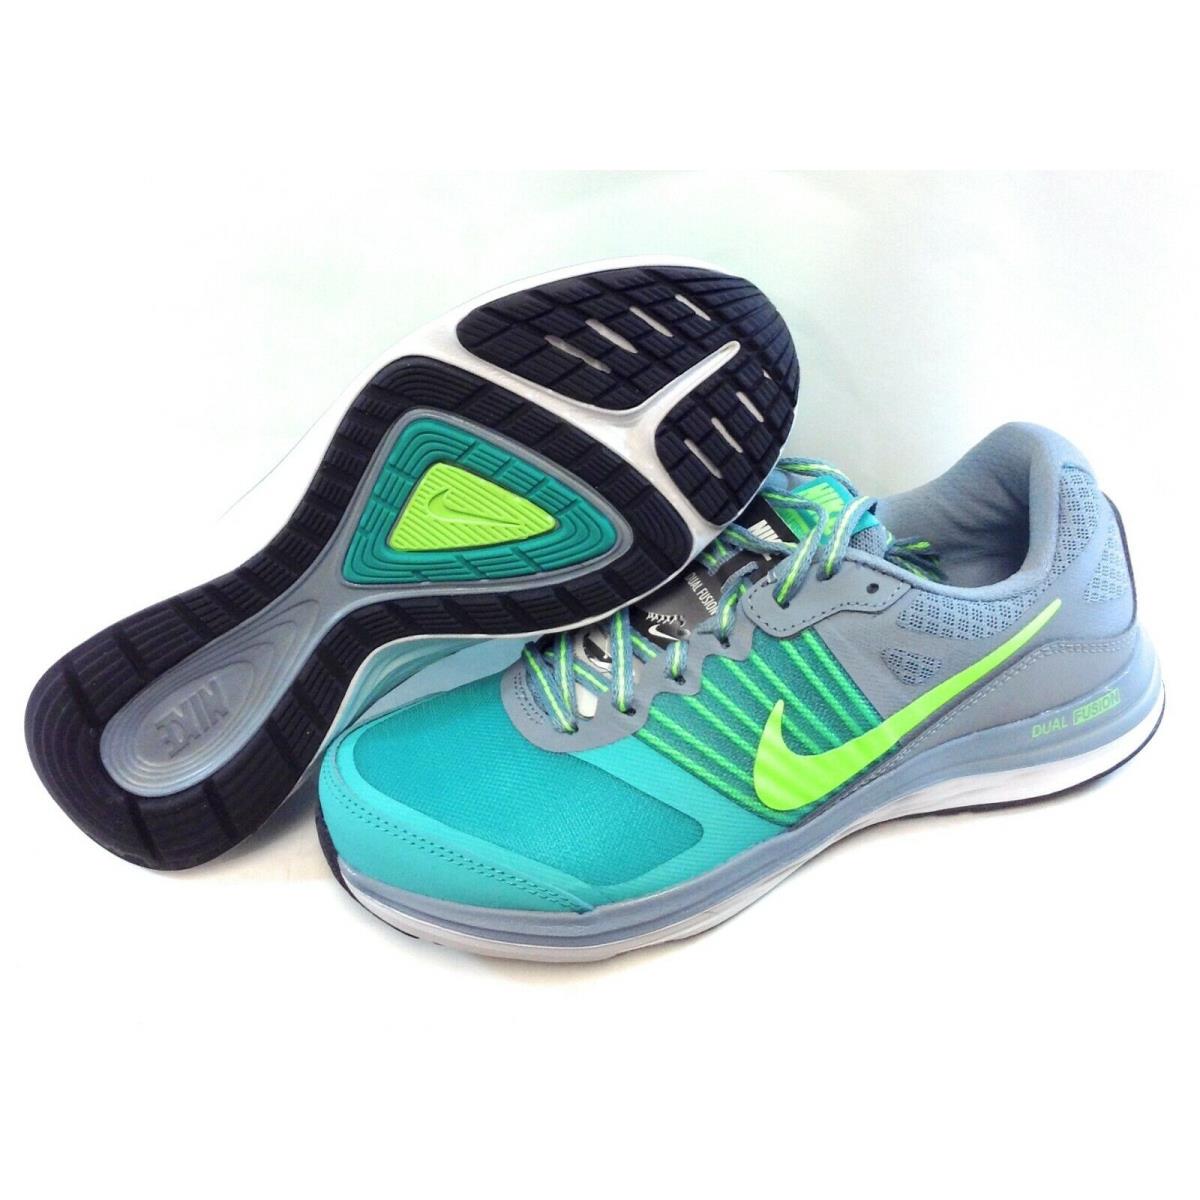 hoofdonderwijzer Percentage etiket Womens Nike Dual Fusion X 709501 004 Grey Green Blue 2014 DS Sneakers Shoes  | 883212863119 - Nike shoes - Grey | SporTipTop